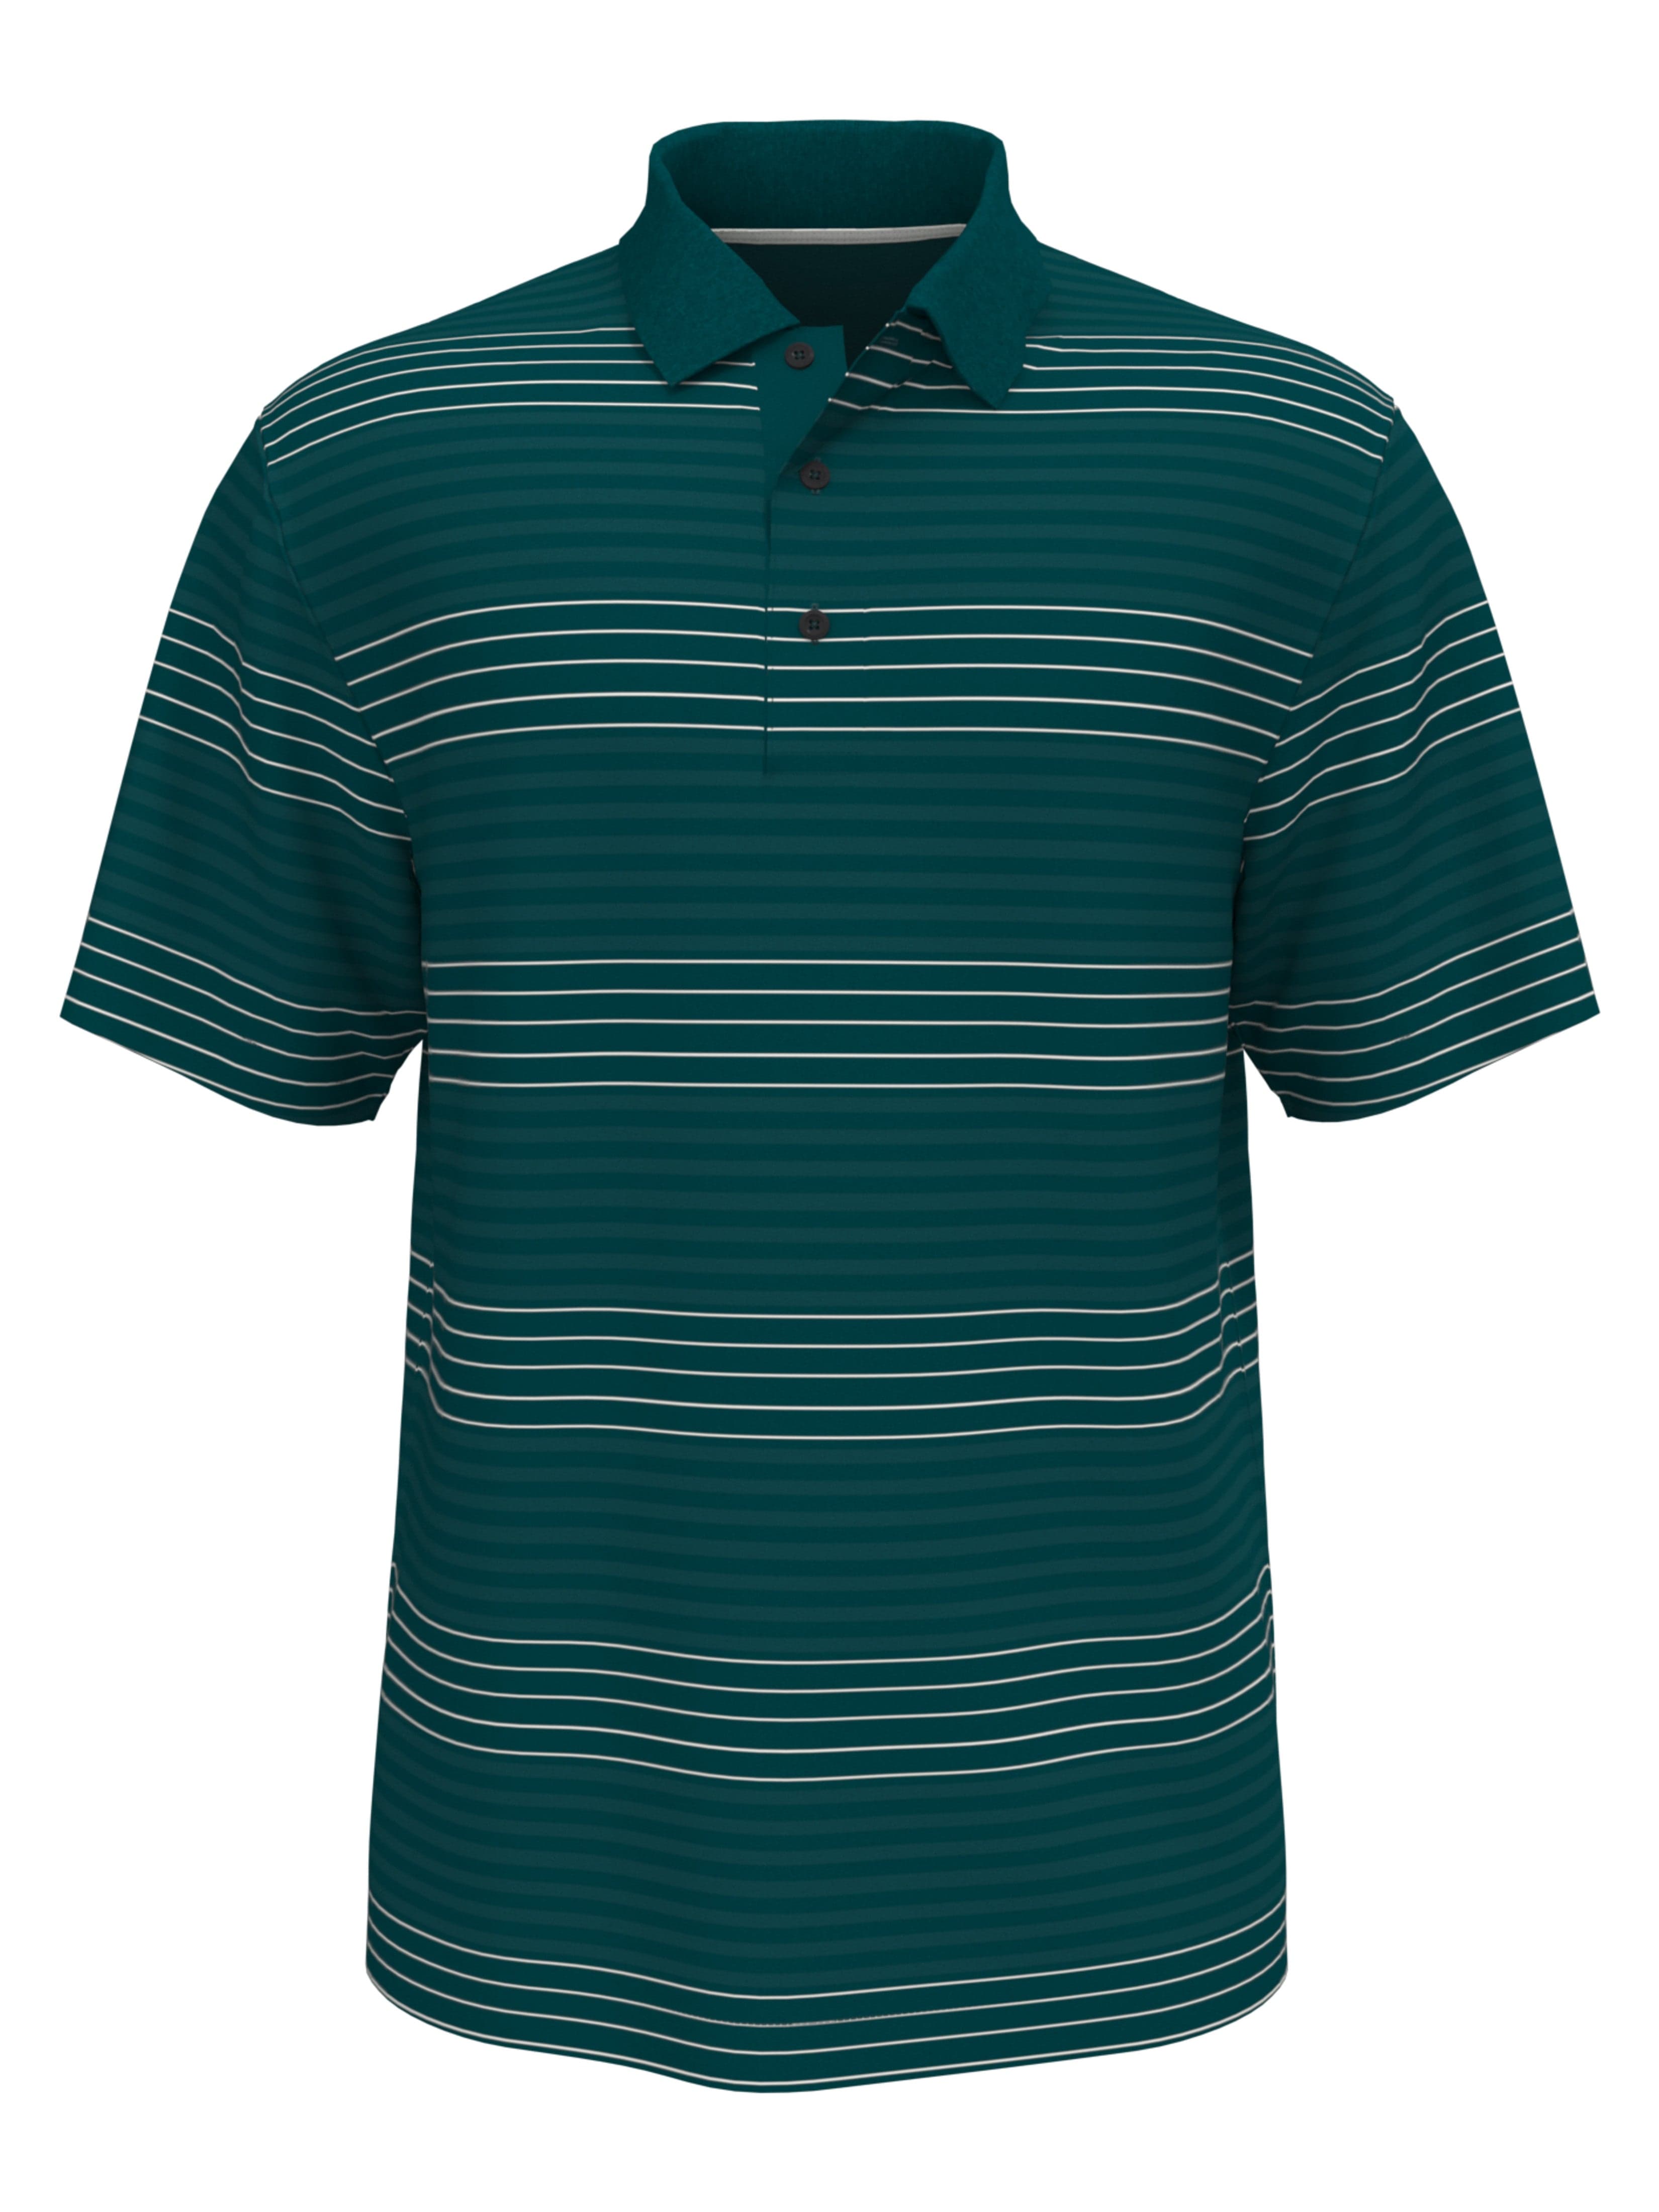 Jack Nicklaus Mens Shadow Energy Stripe Polo Shirt, Size XL, Atlantic Deep Green, 100% Polyester | Golf Apparel Shop